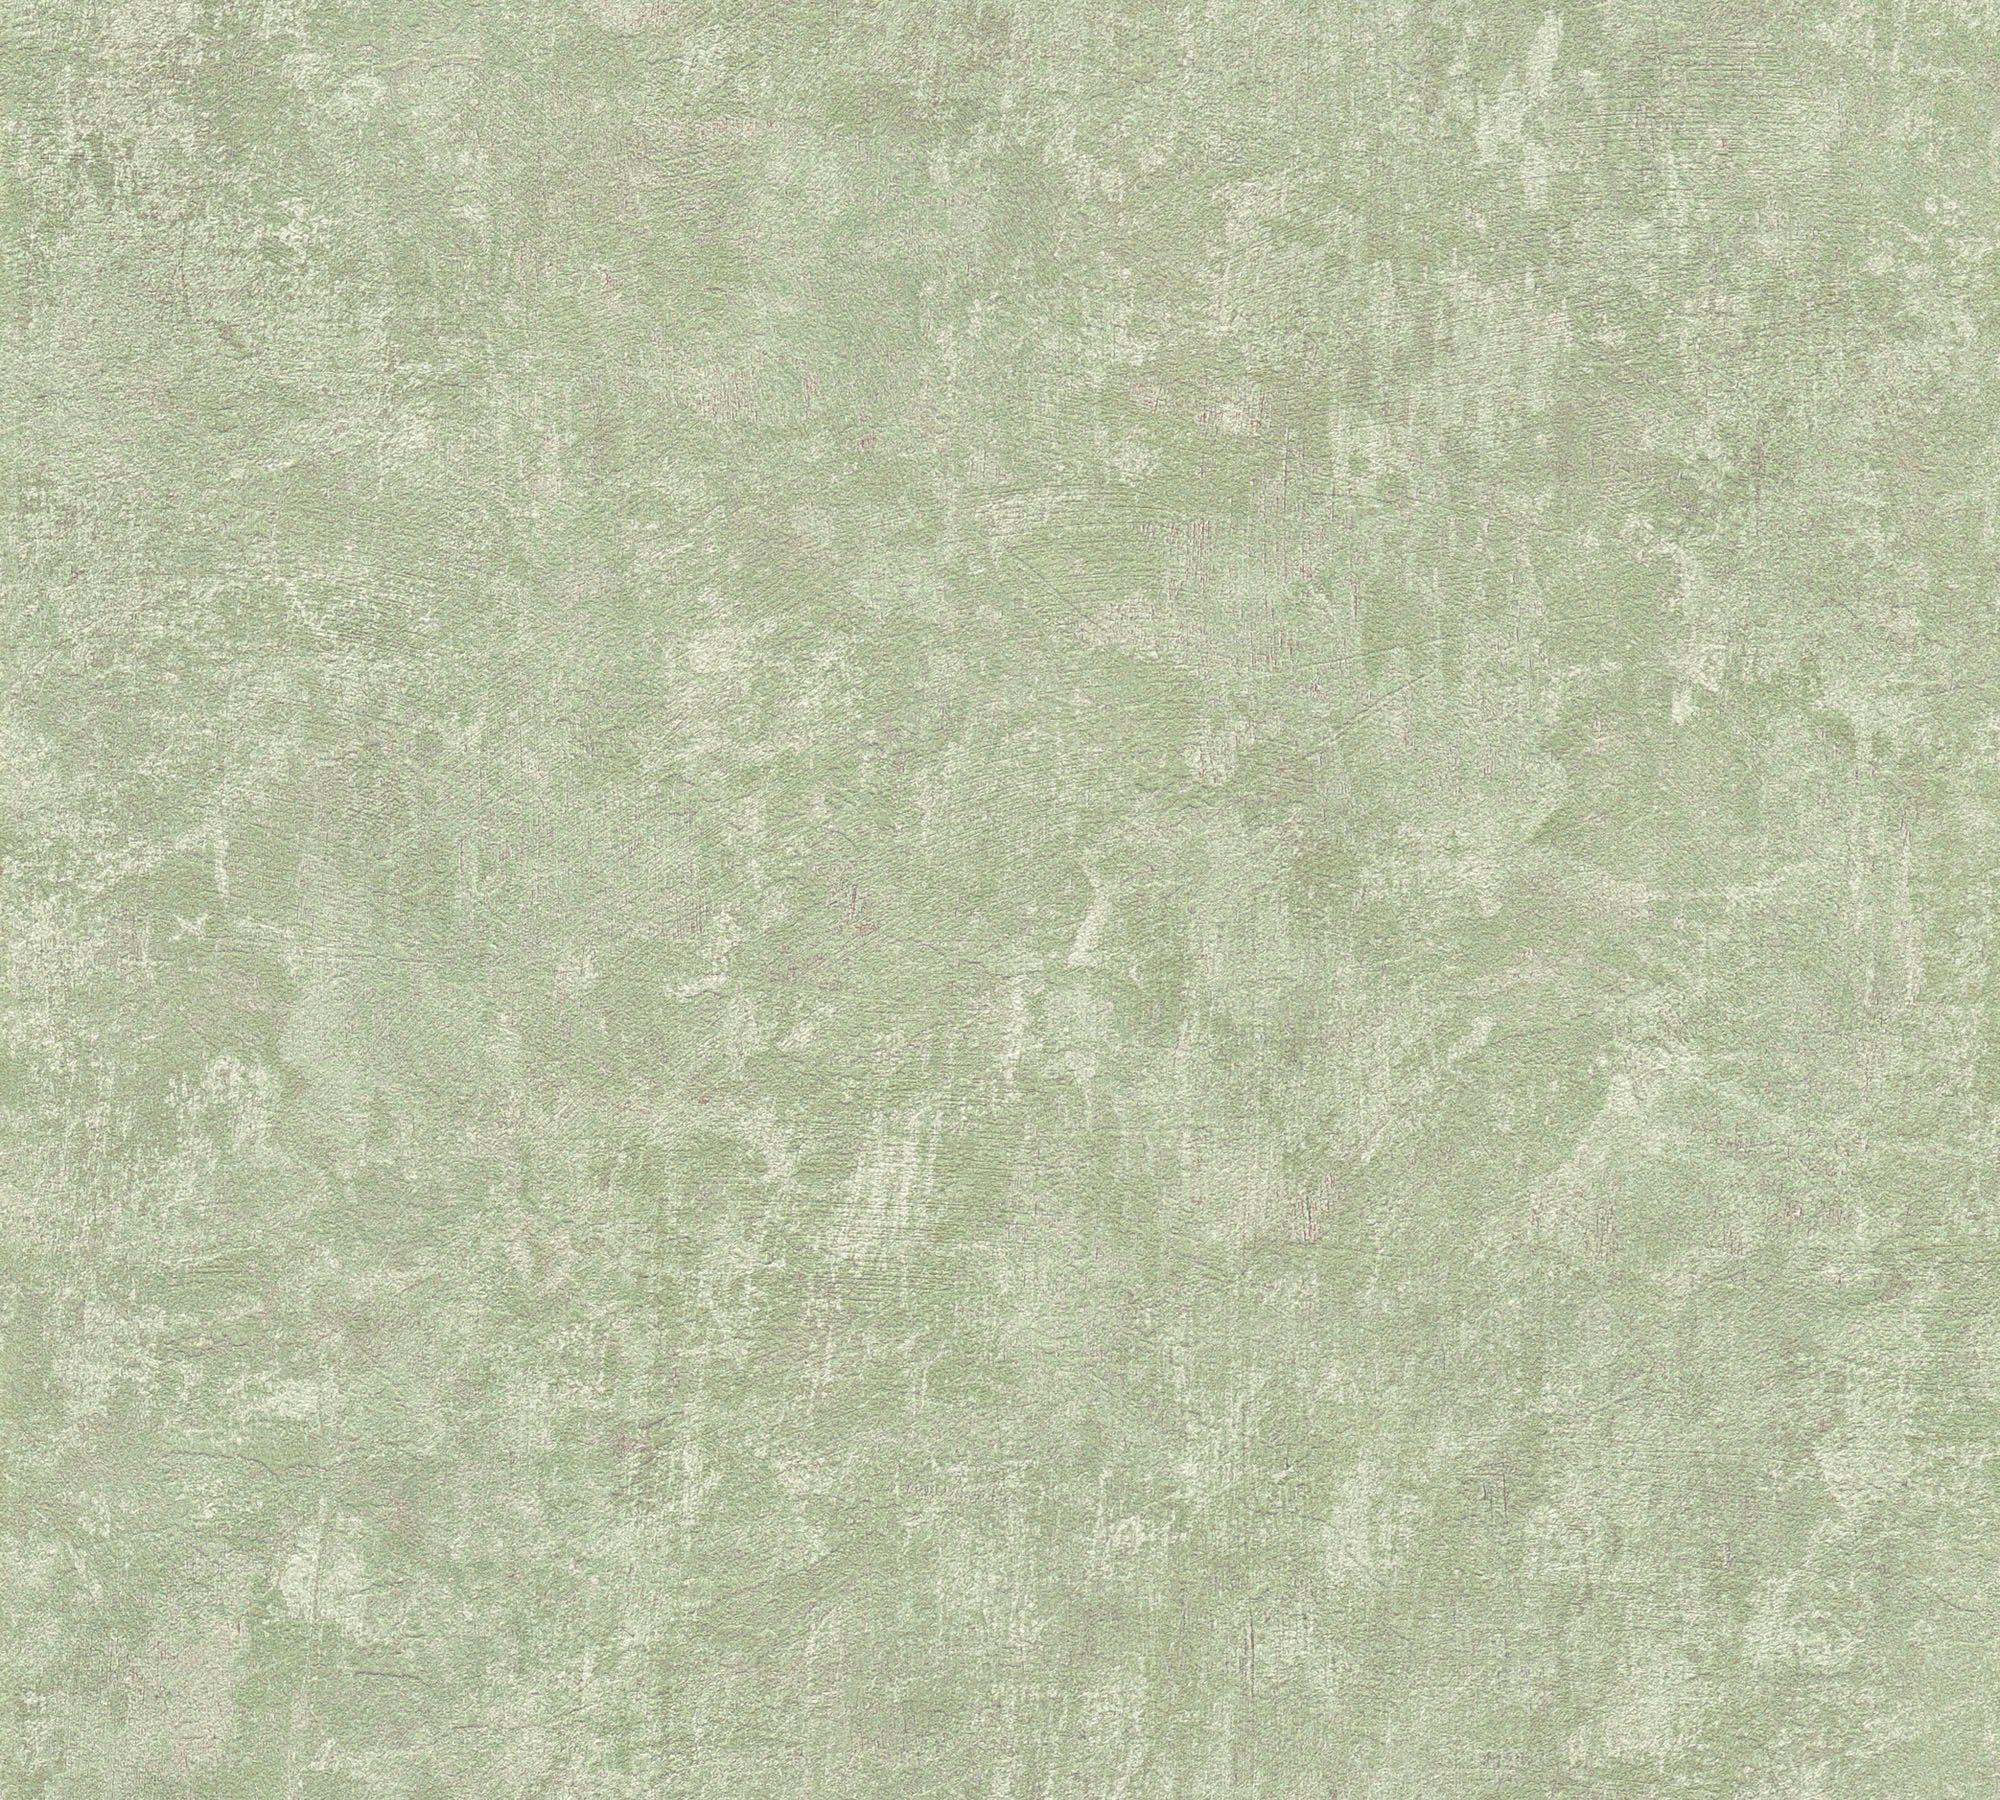 A.S. Création Vliestapete Grün PVC-Frei nachhaltig umweltfreundlich skandinavisch Putzoptik, (1 matt, leicht Living Strukturtapete Natural St), strukturiert